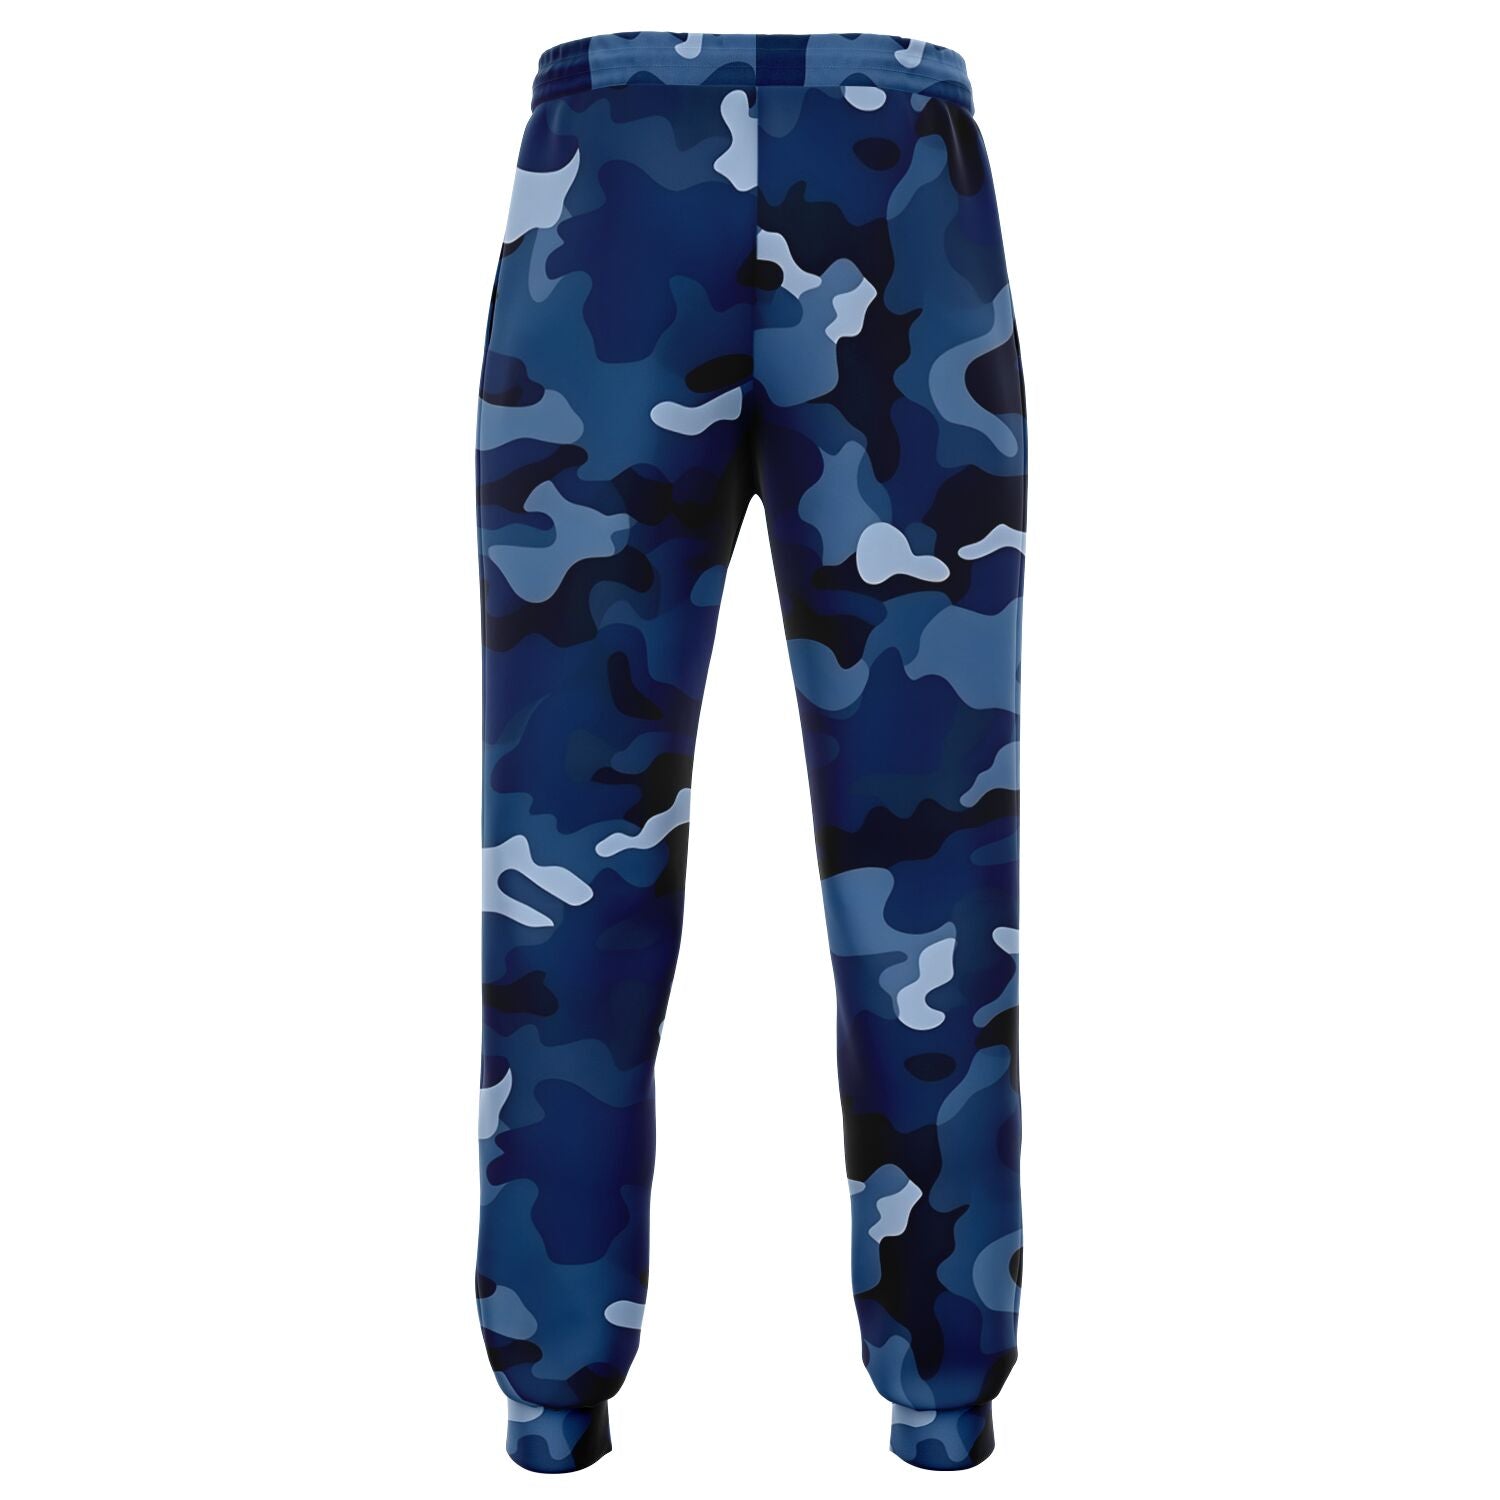 Navy Blue Camo Joggers Sweatpants with Pockets, Camouflage Women Men Fleece Sustainable Fun Comfy Sweats Pants Loungewear Starcove Fashion